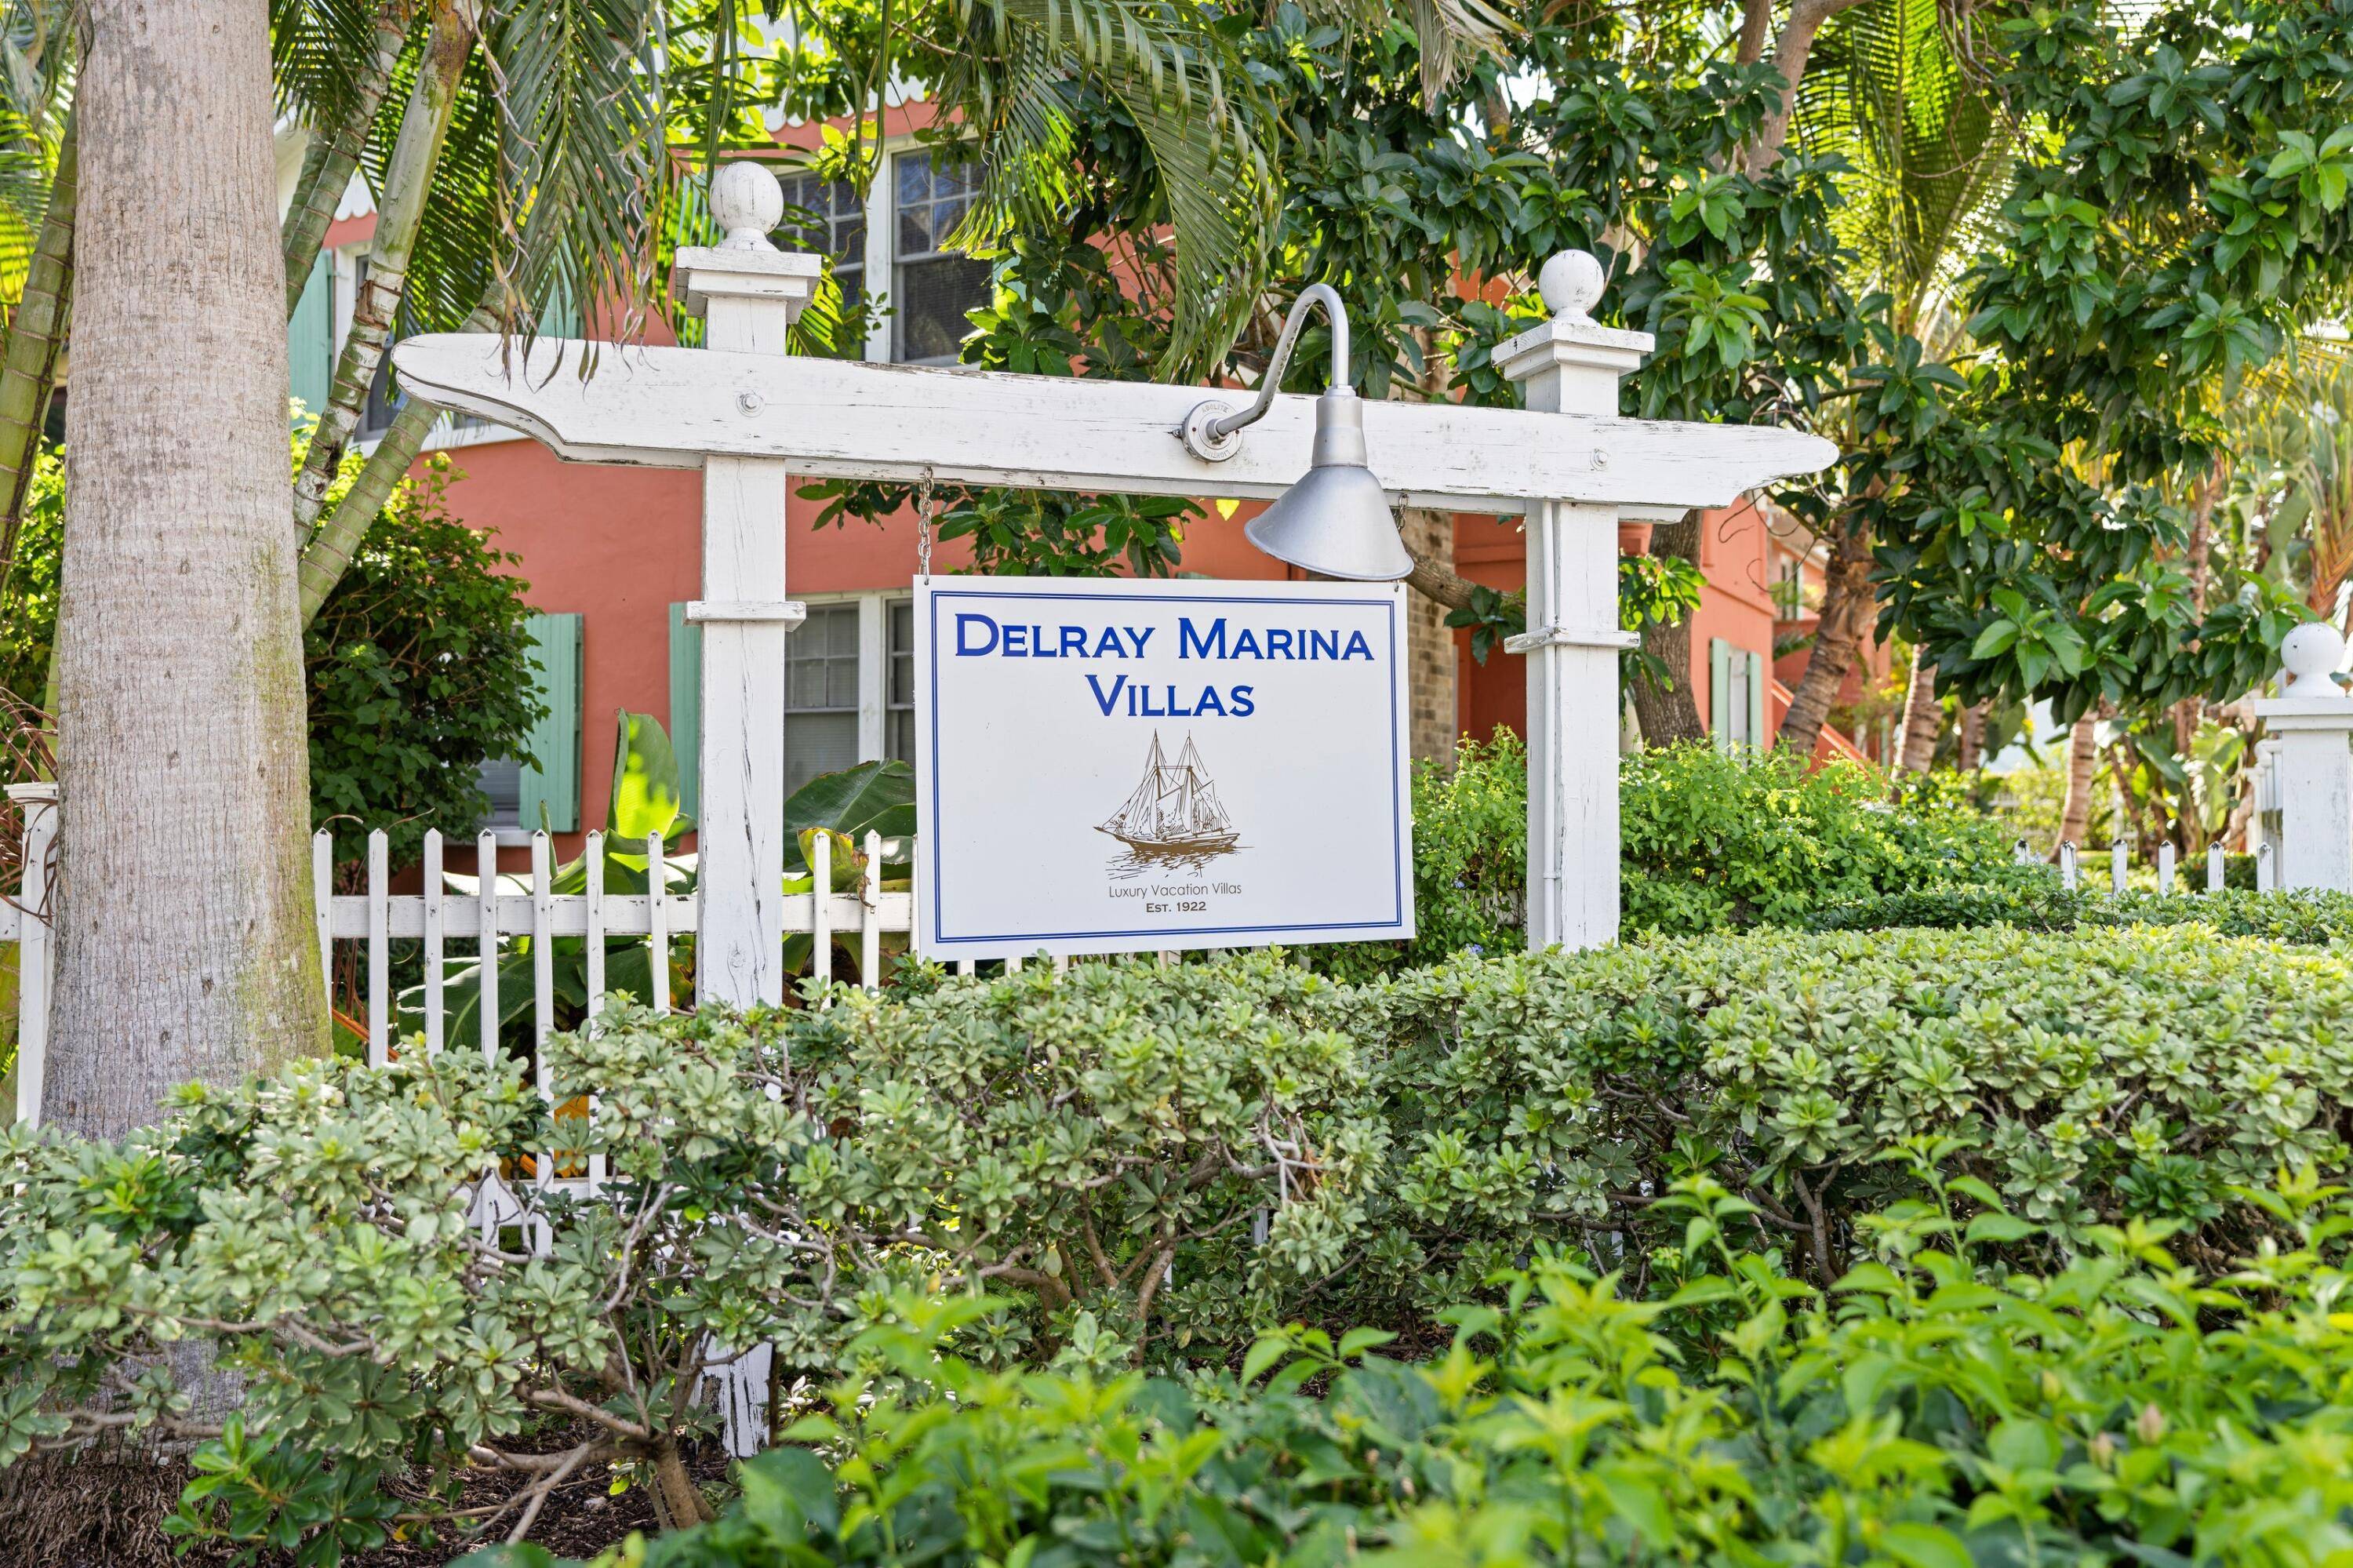 Within the Marina Historic District neighborhood, Delray Marina Villas is a historic gem.